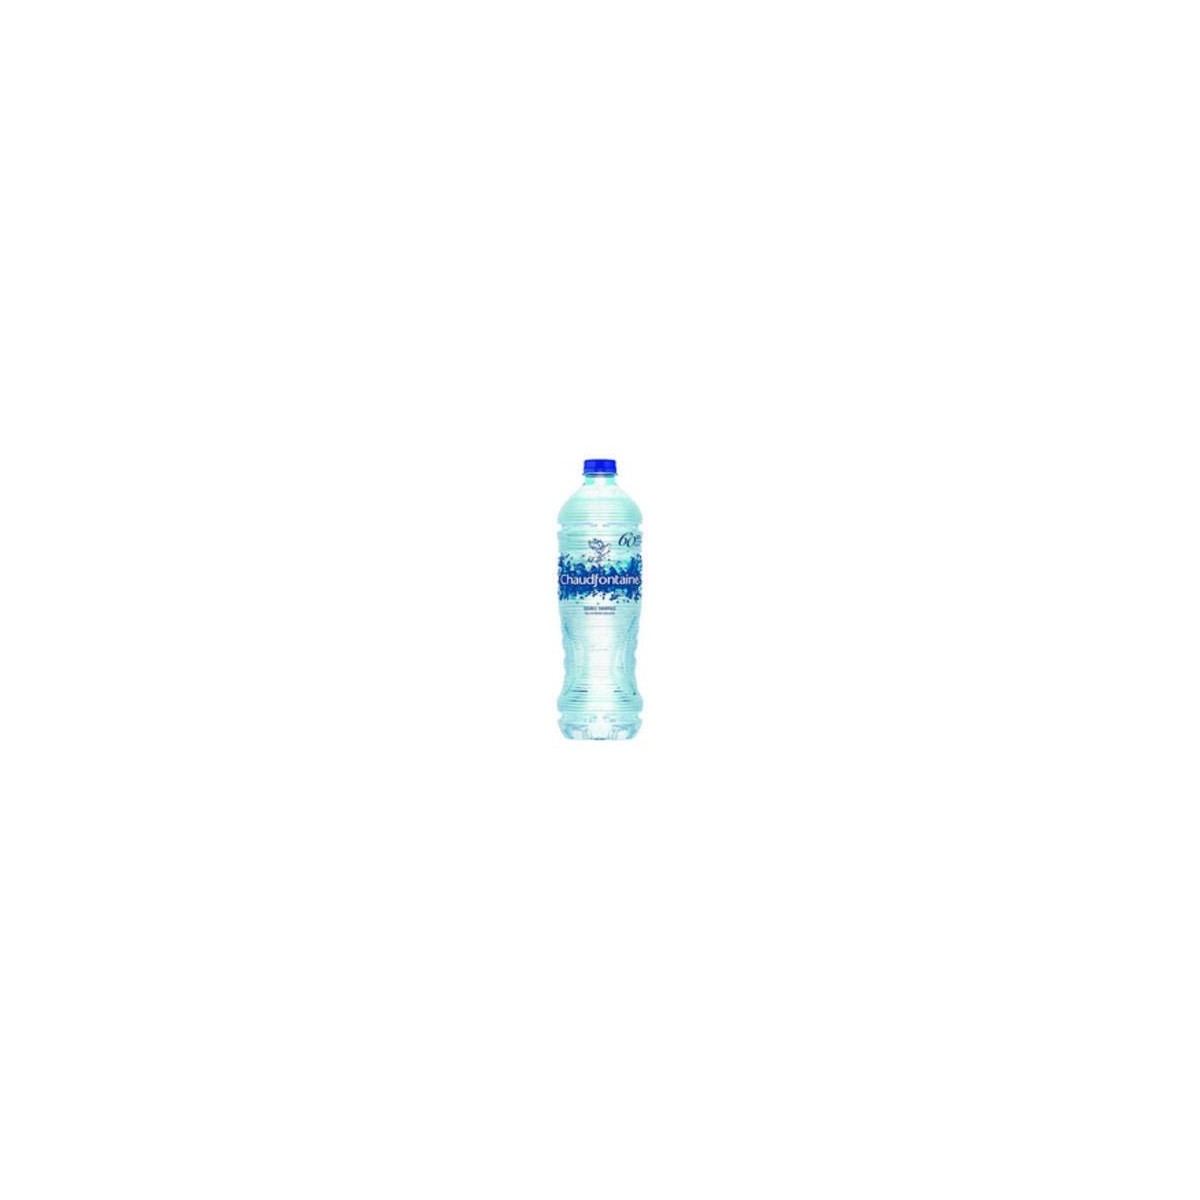 DRINK CHAUDFONTAINE PLAT WATER 6 X 1L FLESJE  TRAY